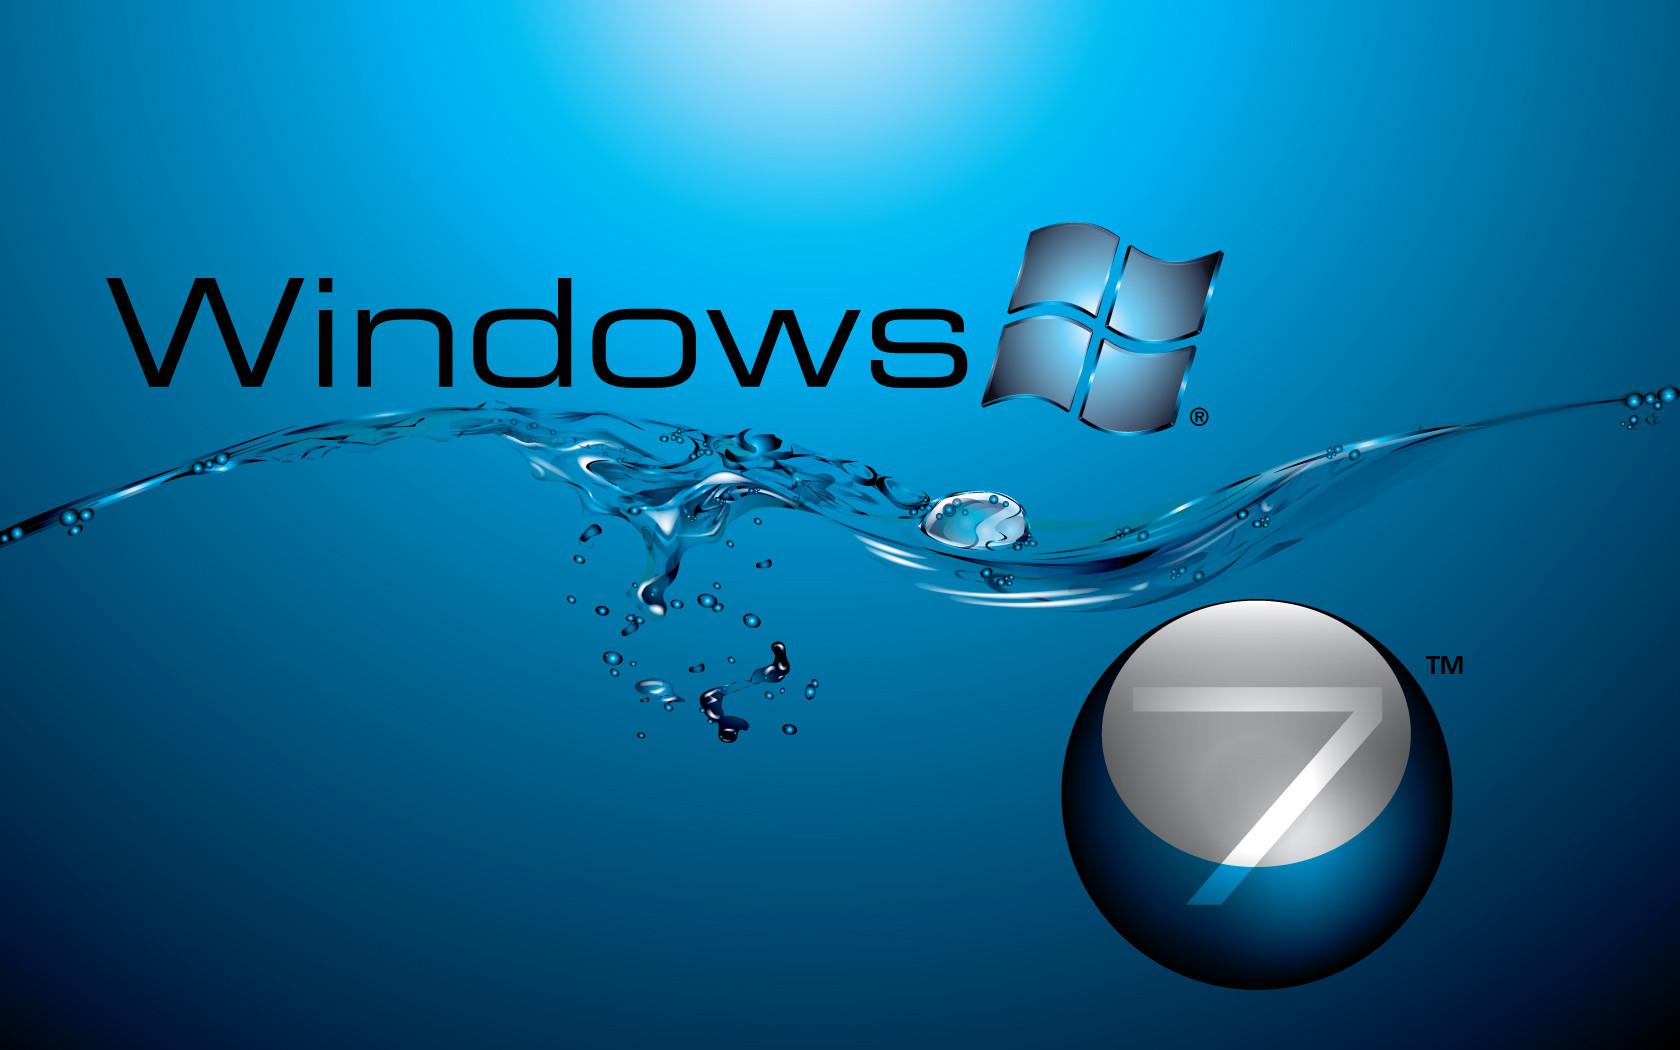 Windows Desktop Backgrounds Free Download Free | HD Wallpapers Range